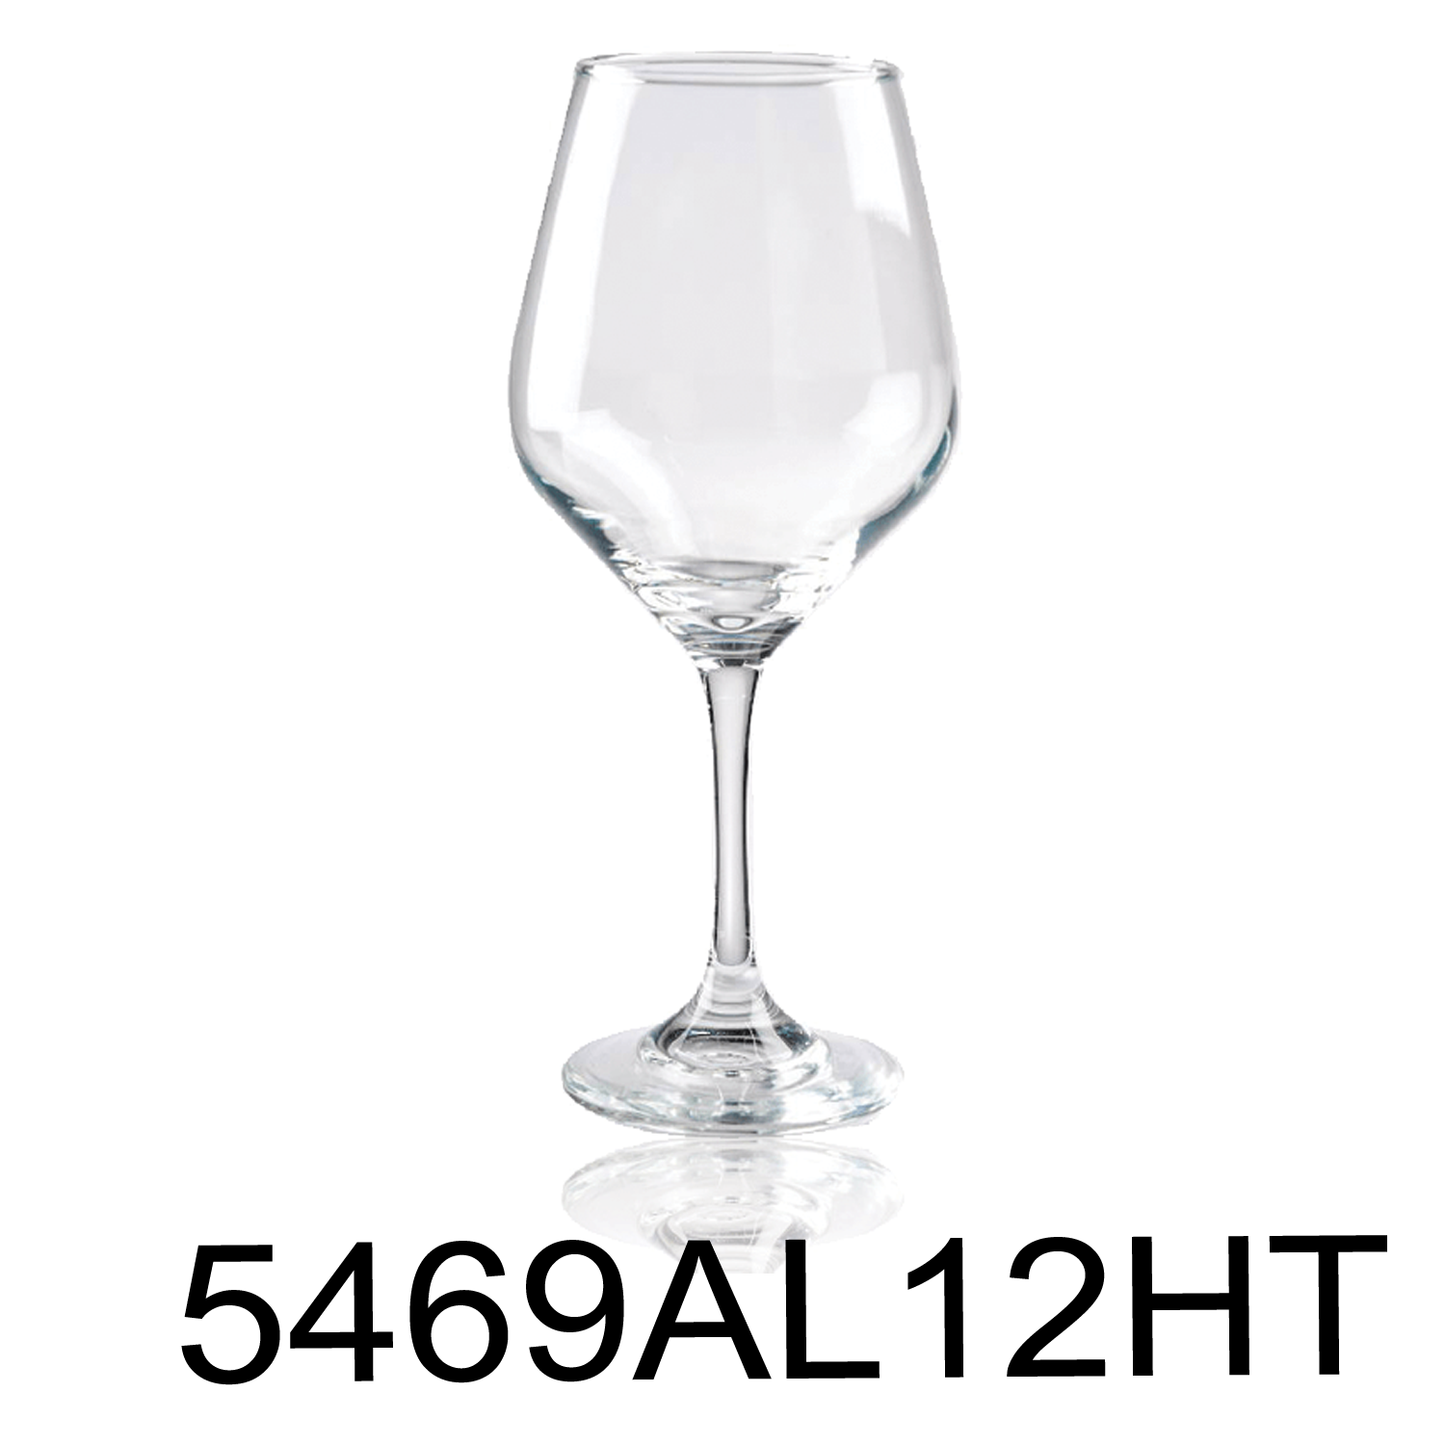 The XL Wine Glass